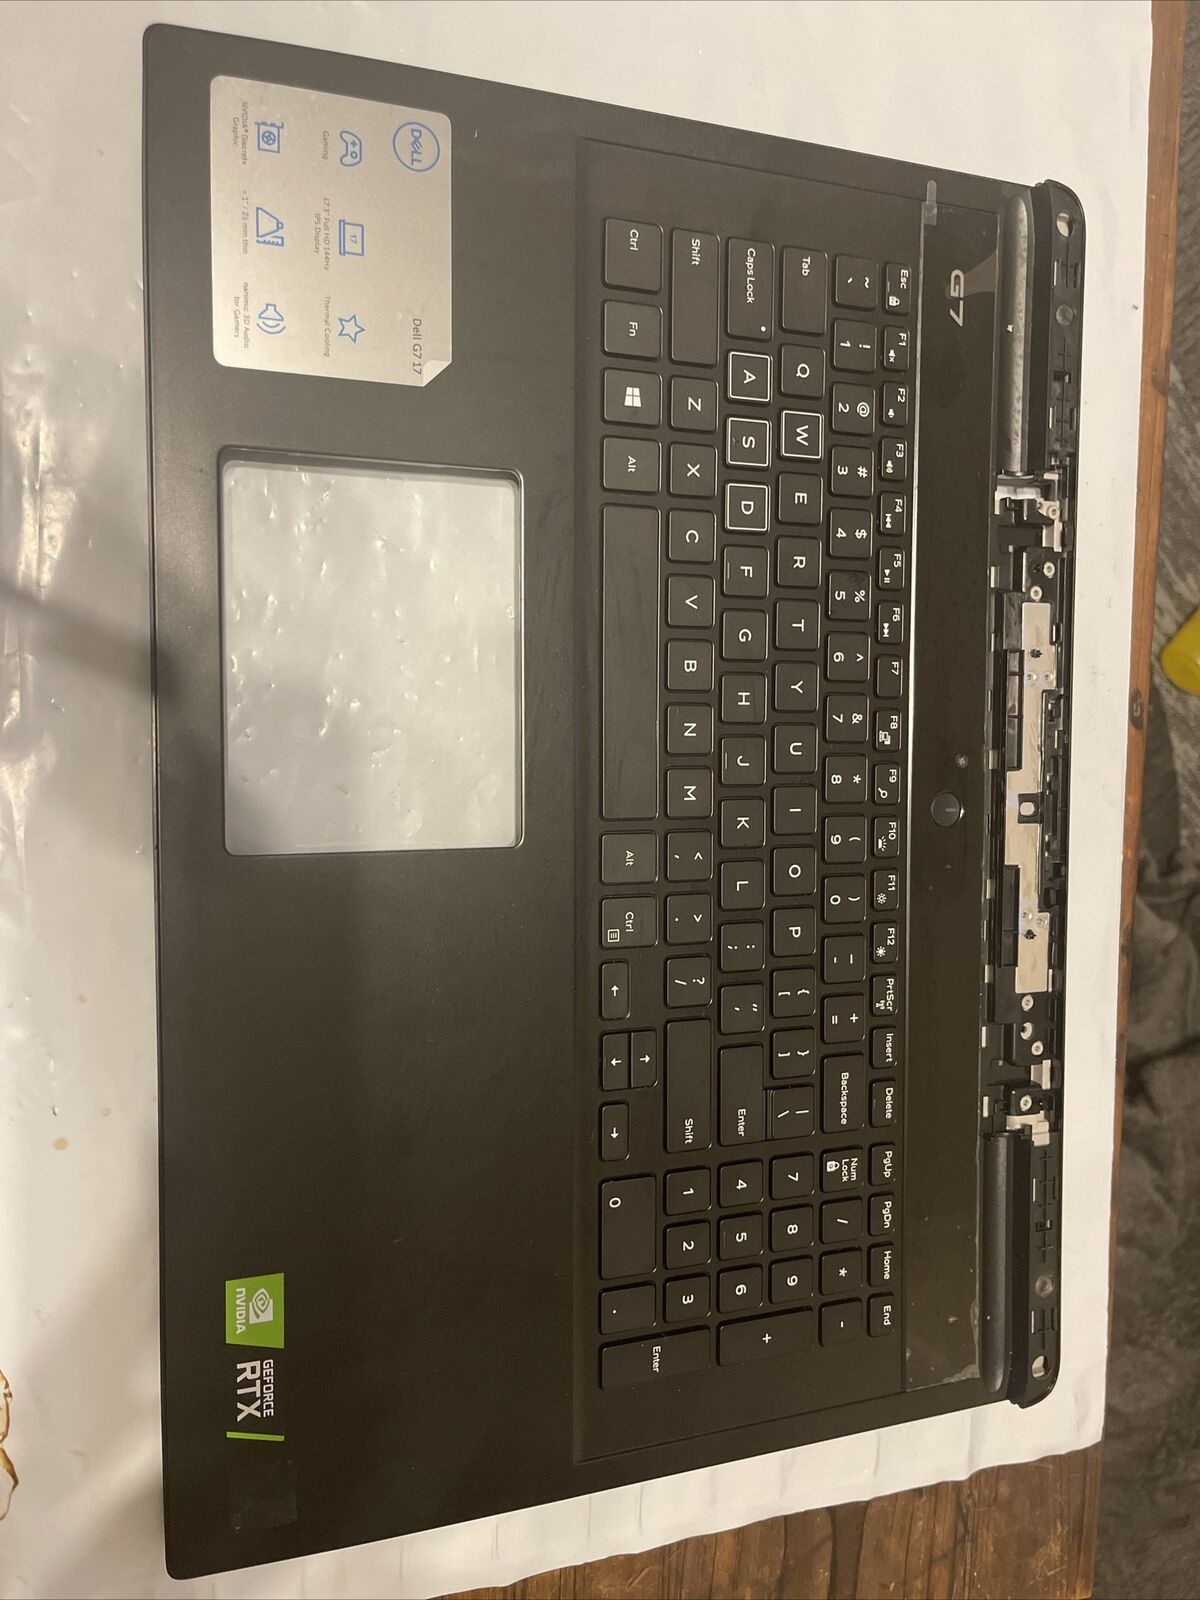 Genuine Dell G7 17 7790 Laptop Palmrest Touchpad US/EN Keyboard 6WFHN 06WFHN P6